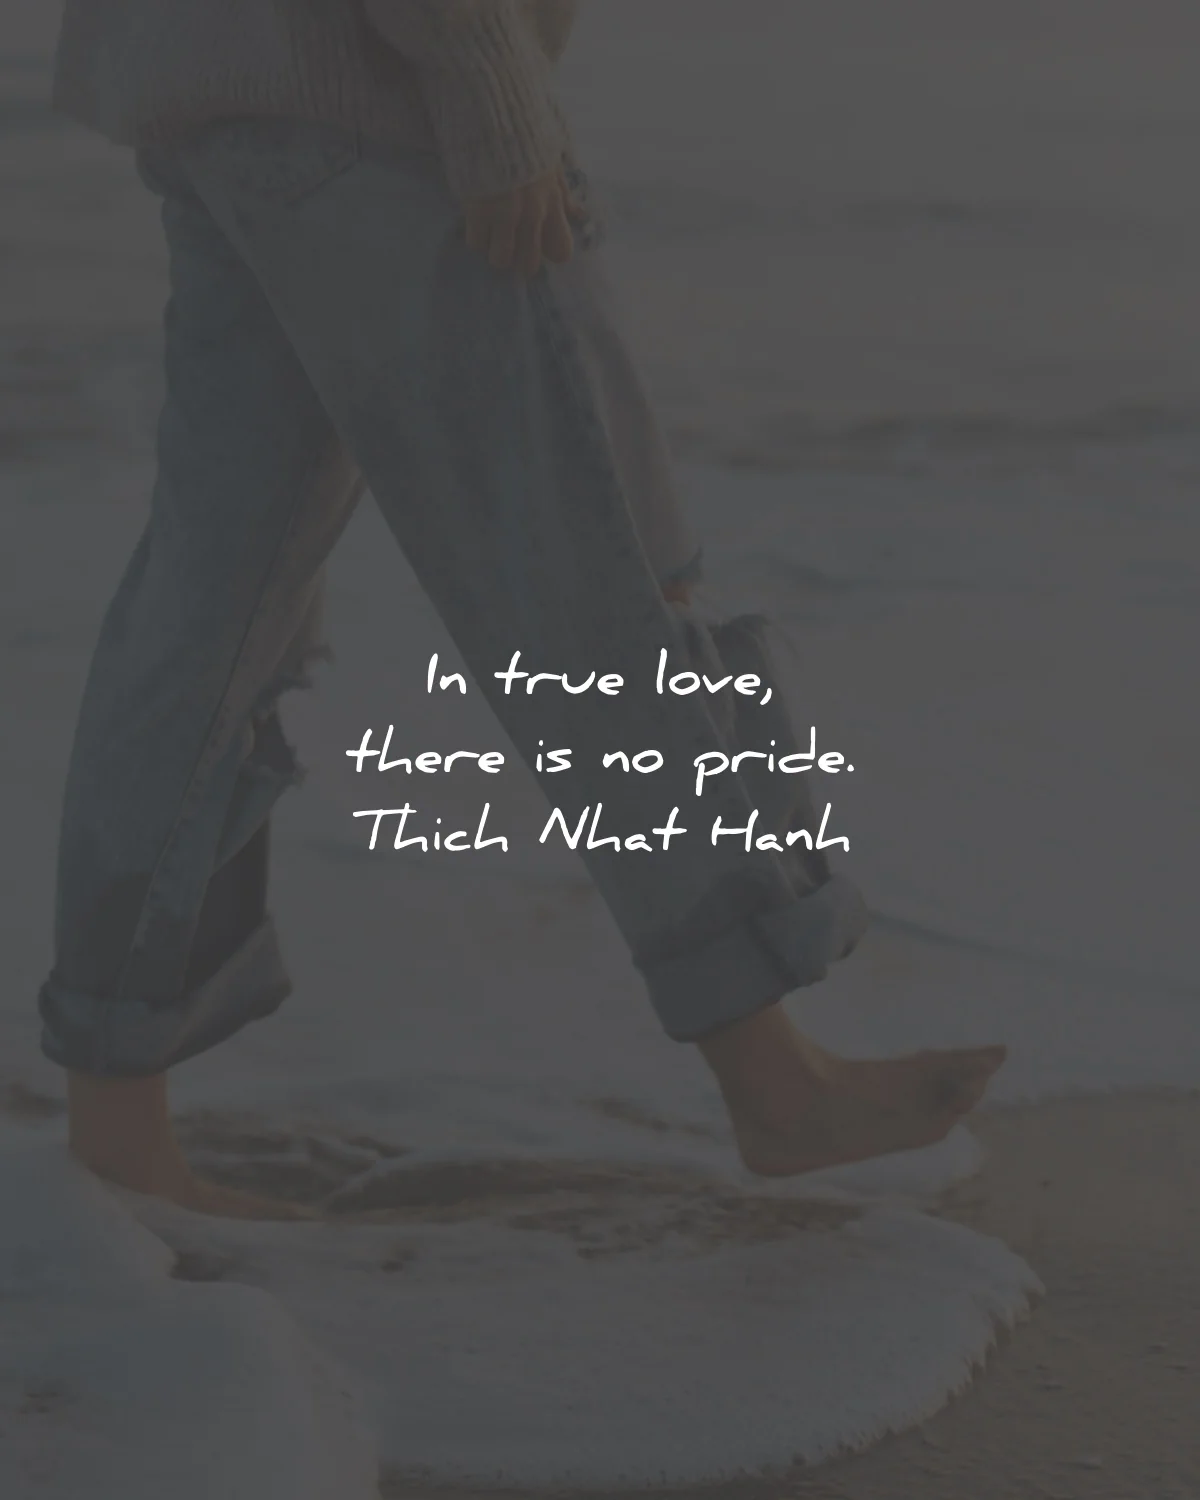 thich nhat hanh quotes true love pride wisdom